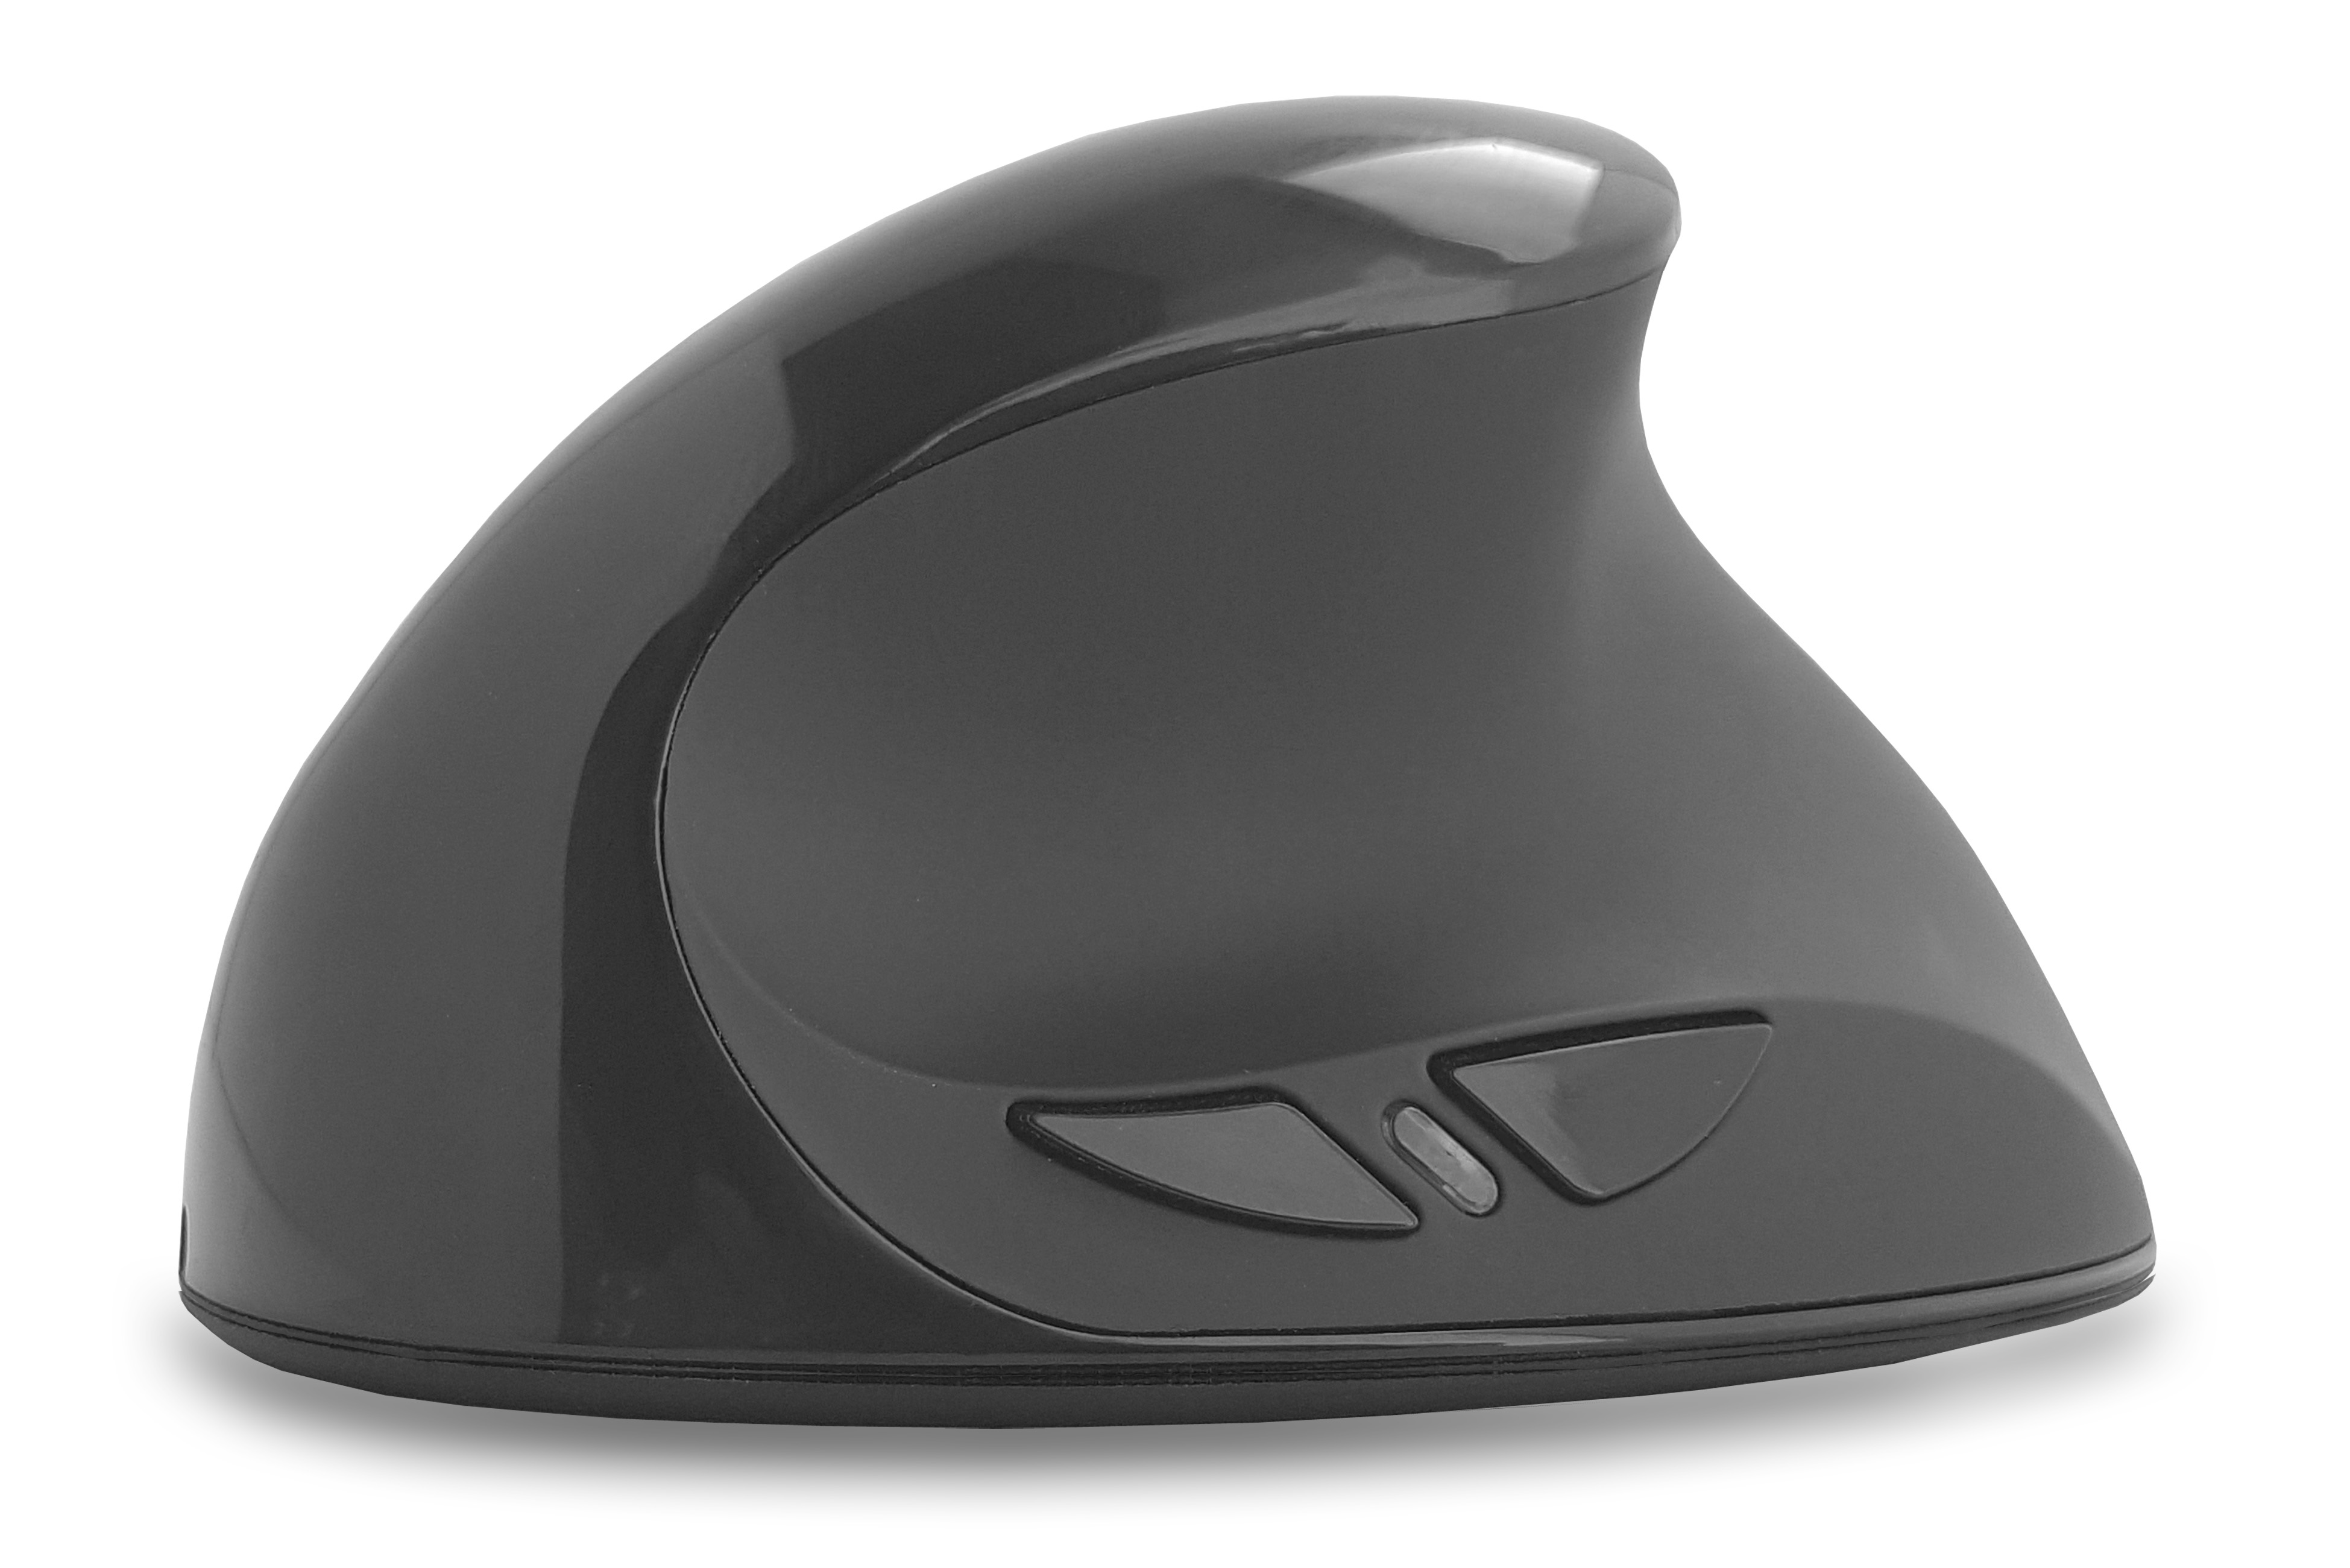 JENIMAGE JI-CW-01 Kabellos Rechtshänder schwarz Maus, Rechts ergonomische Wireless